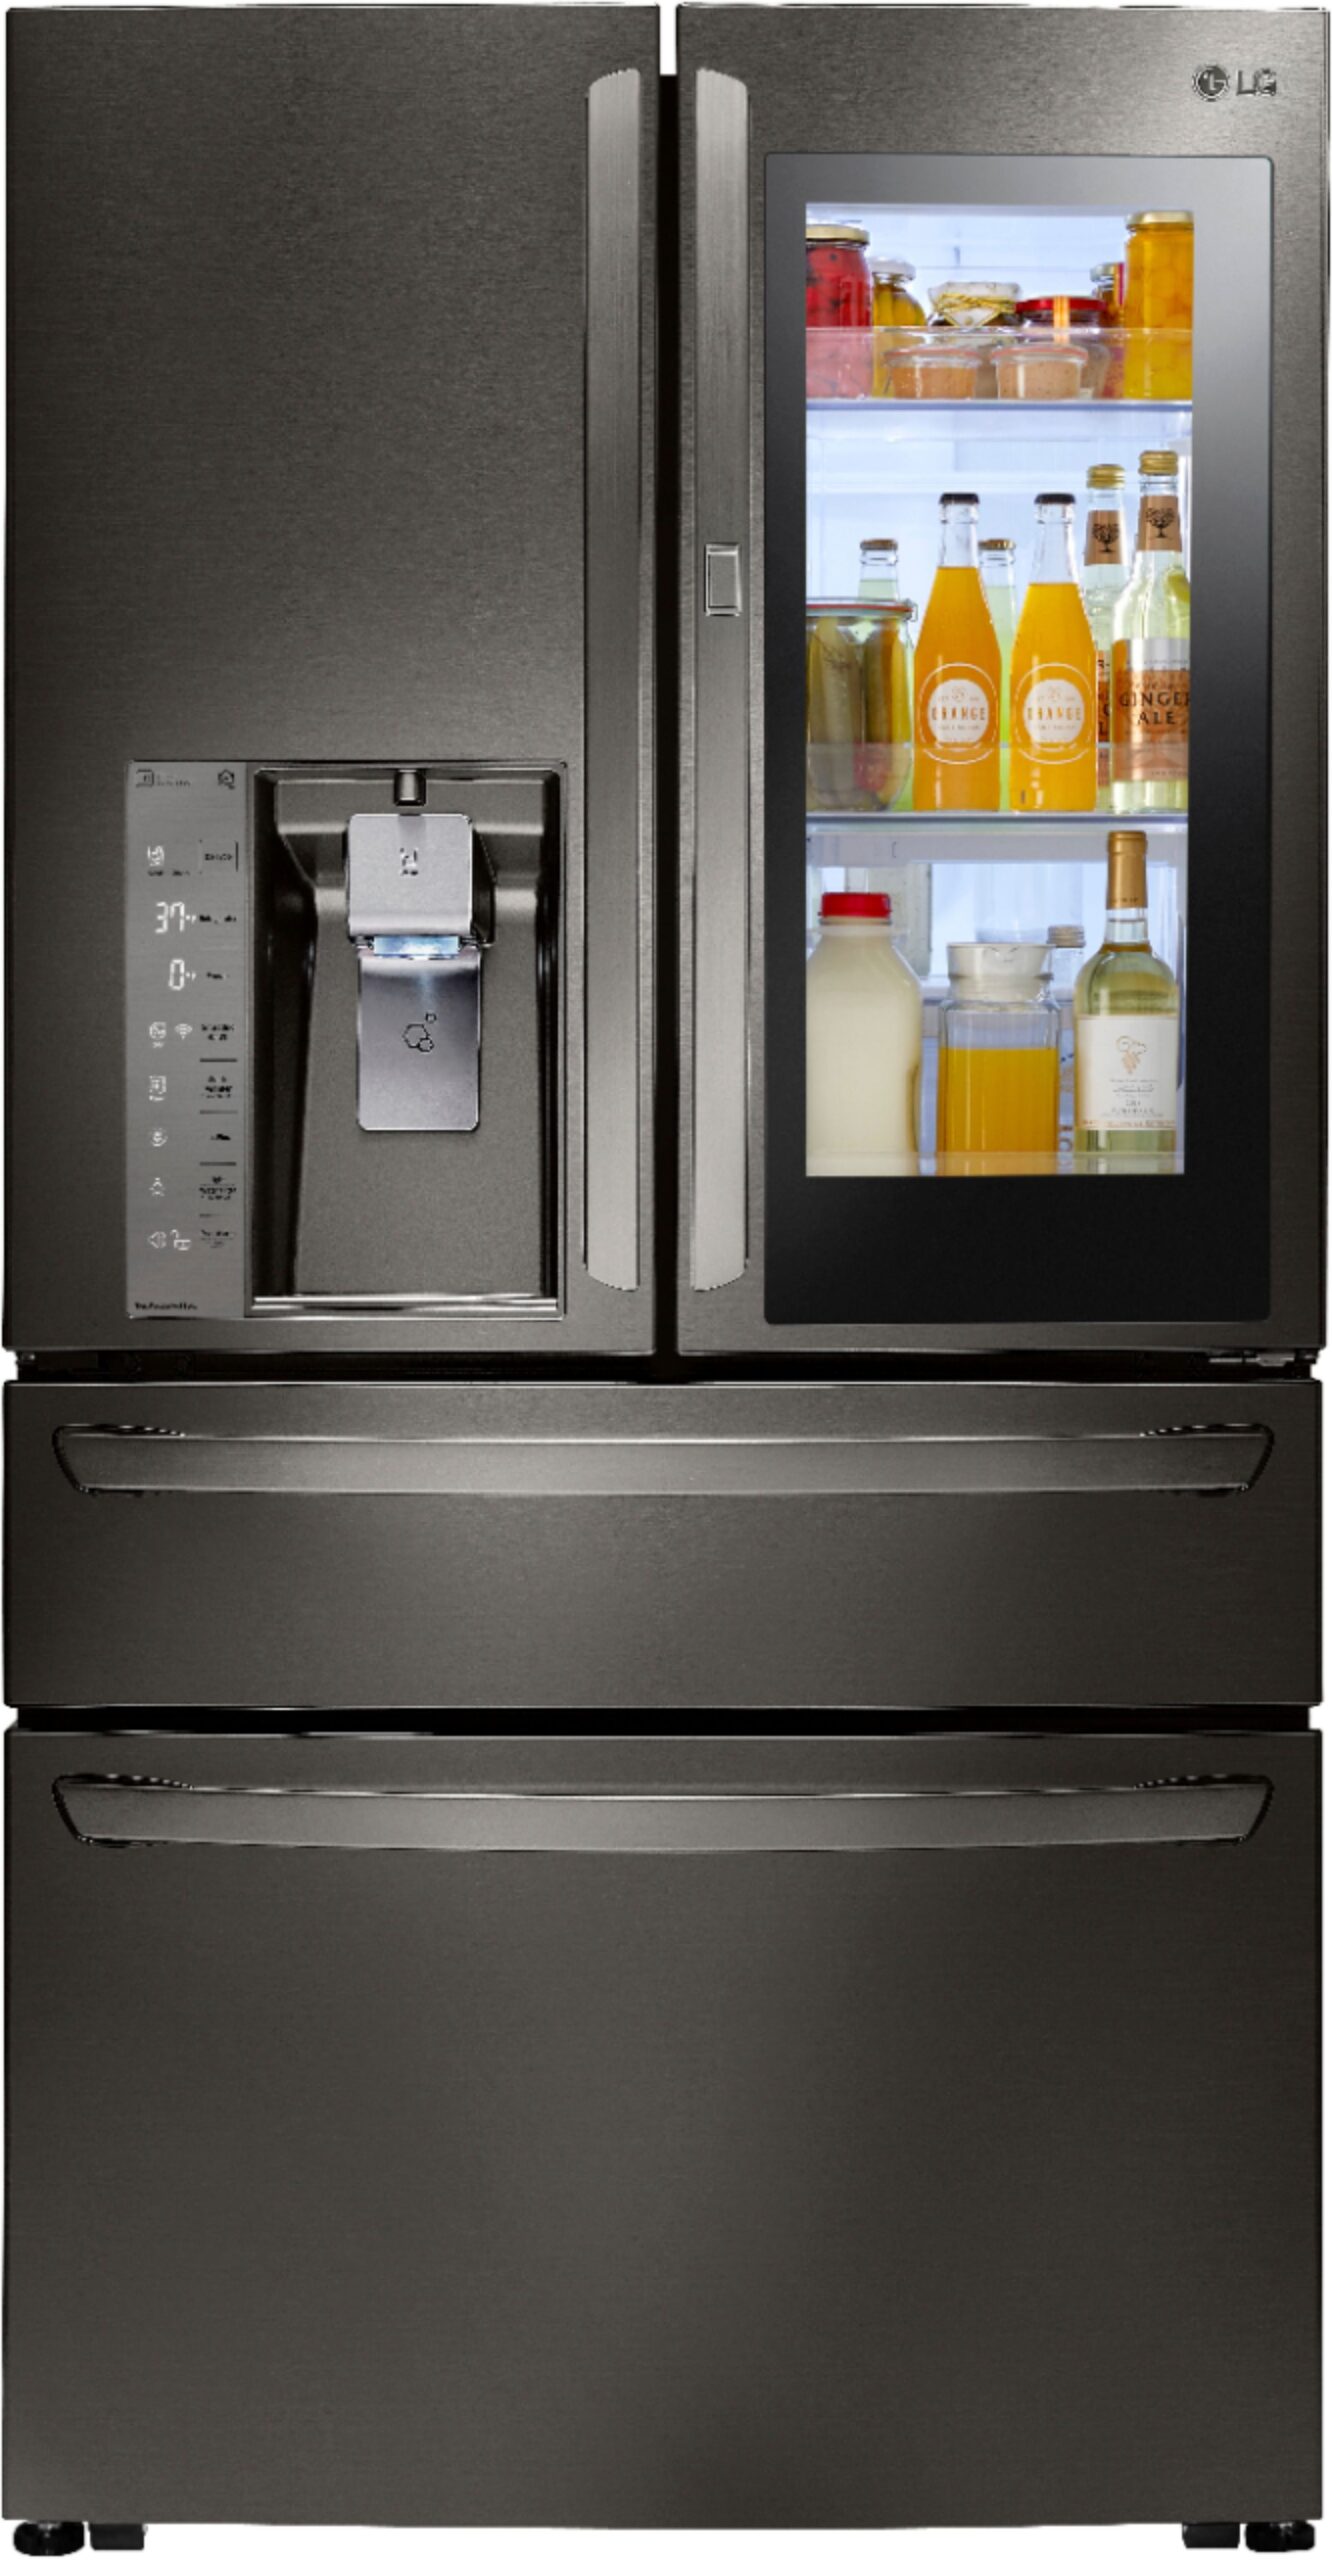 LG Wi-Fi-Enabled 29.7-Cubic Foot Refrigerator